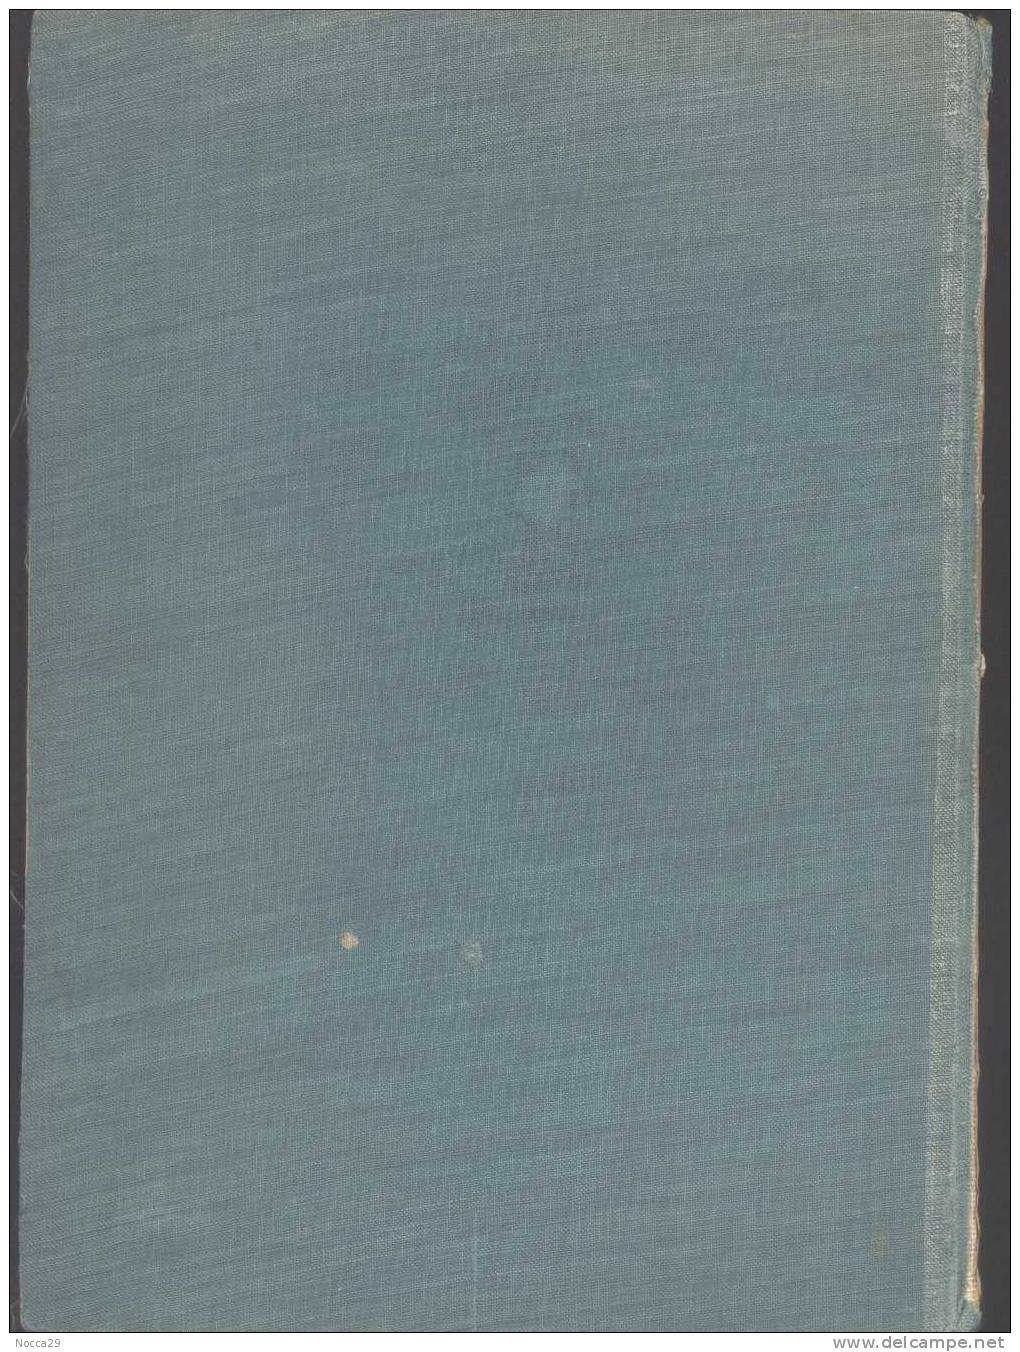 AUF KUNDFAHRT IM JMALAJA - 1937 - SPEDIZIONE SULL'HYMALAIA - ALPINISMO. ORIGINALE! - Biografieën & Memoires